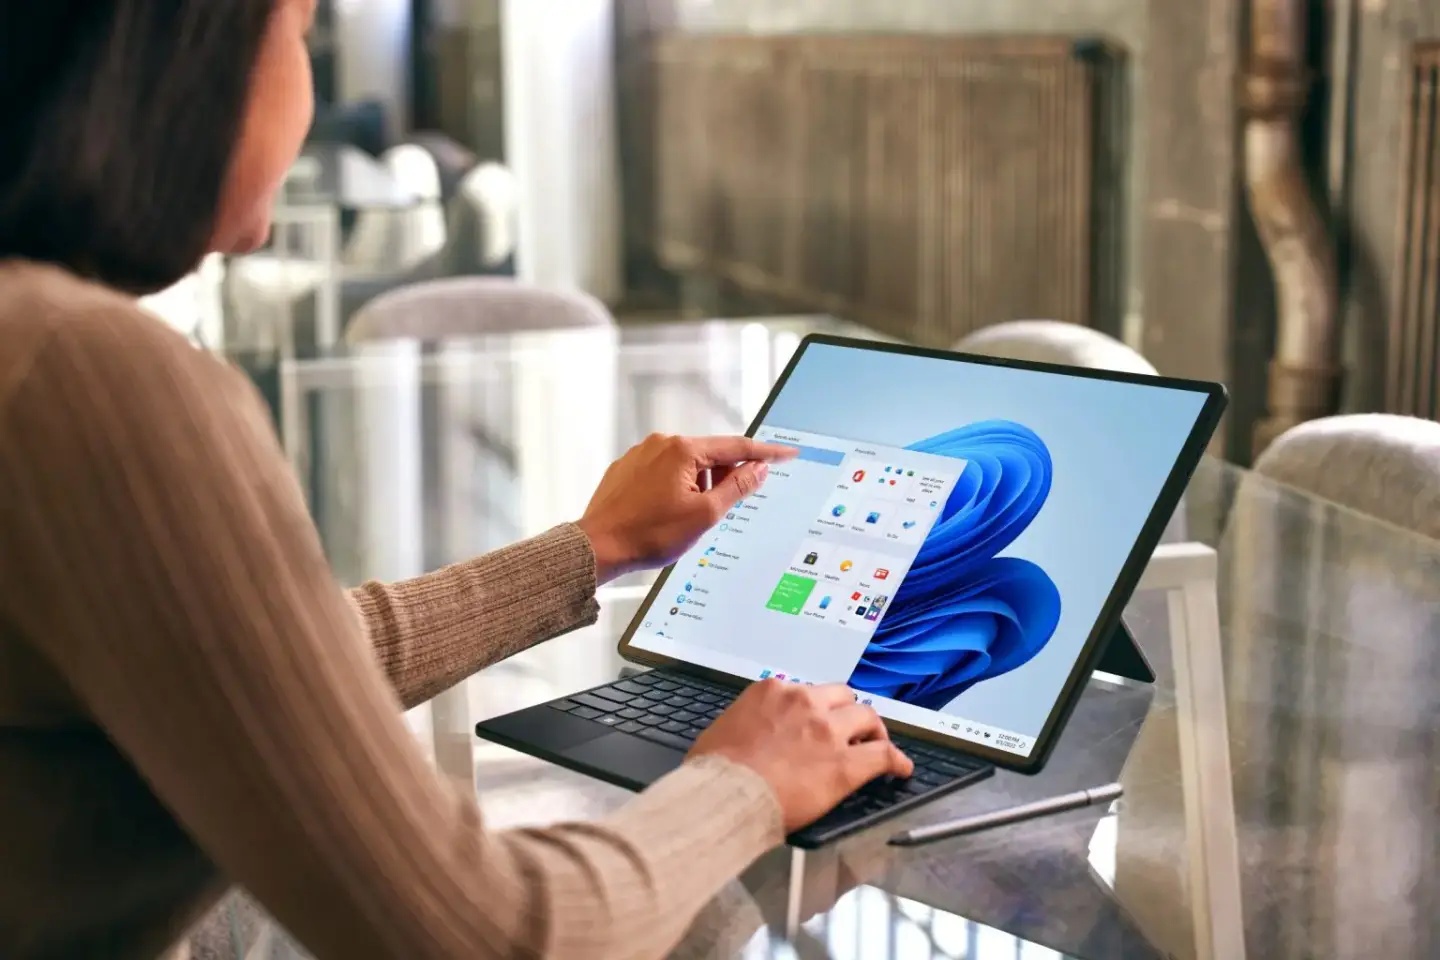 2022 摺疊筆電規格比較：新版 Lenovo ThinkPad X1 Fold 跟 ASUS Zenbook 17 Fold OLED 哪個更優秀？